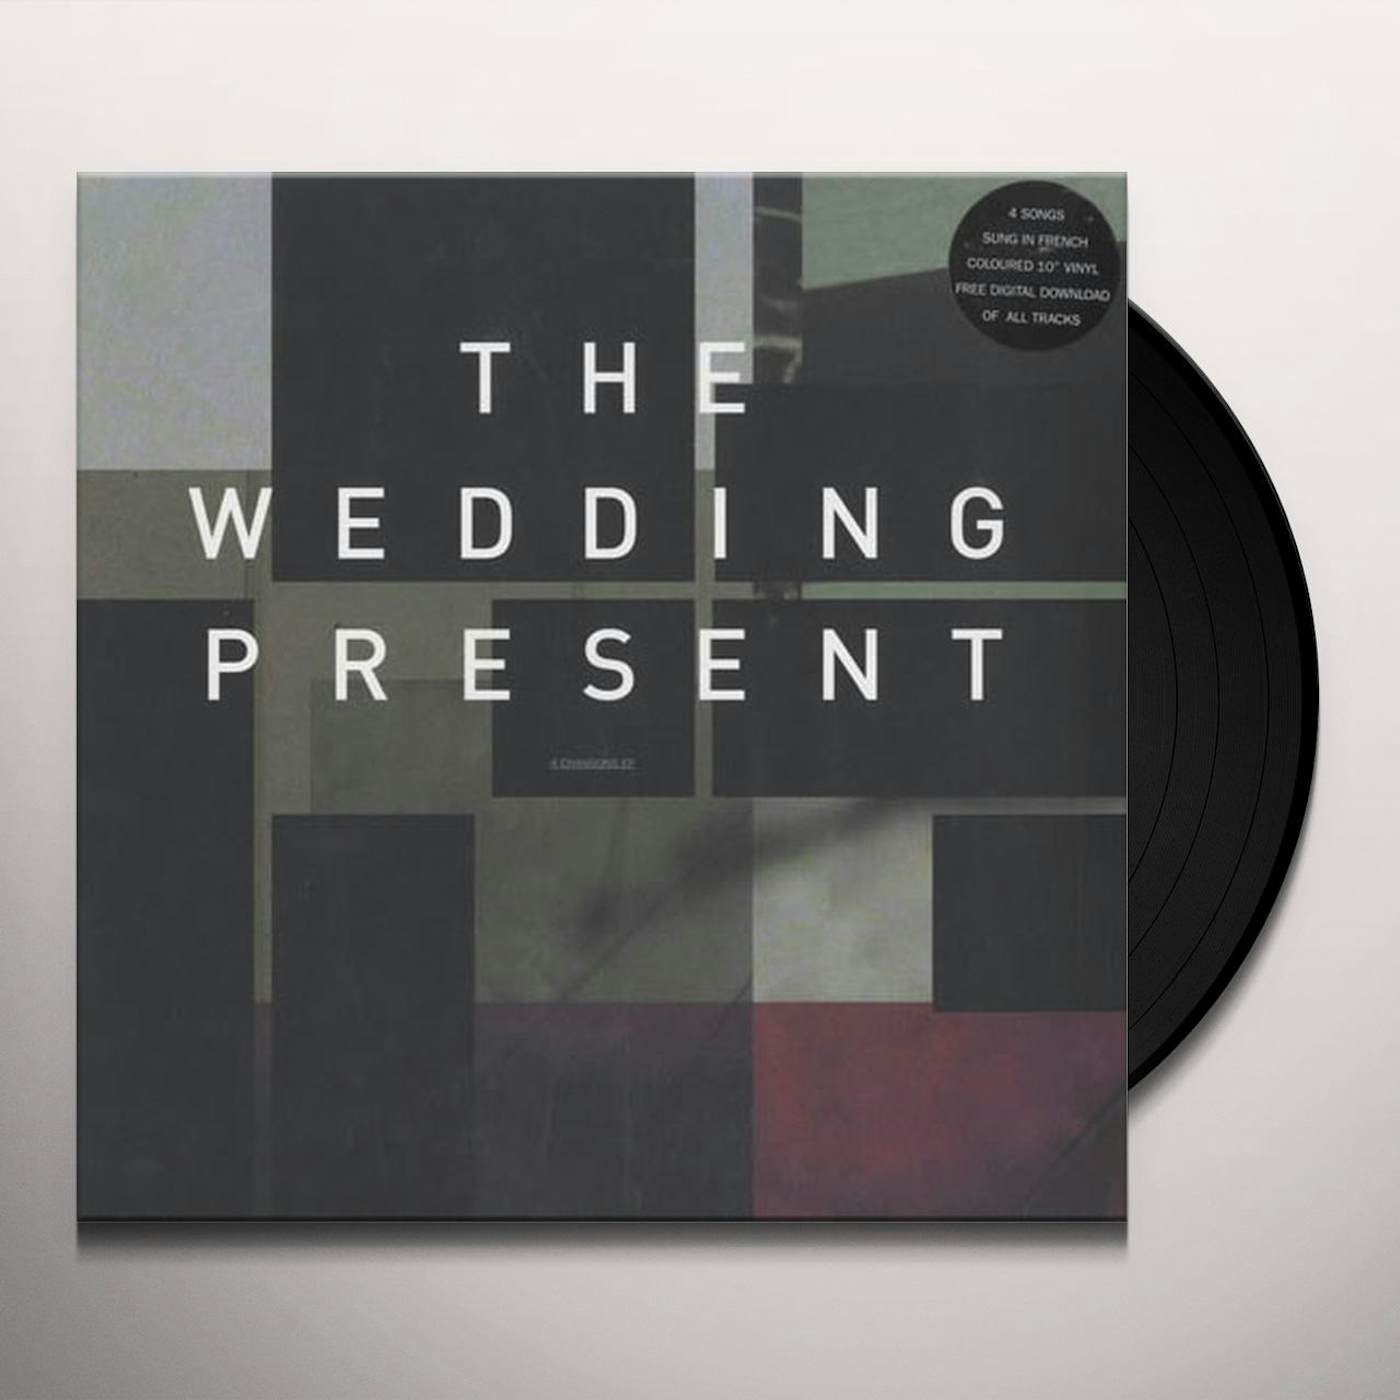 The Wedding Present 2014 RSD SINGLE (GERMAN VERSIONS) Vinyl Record